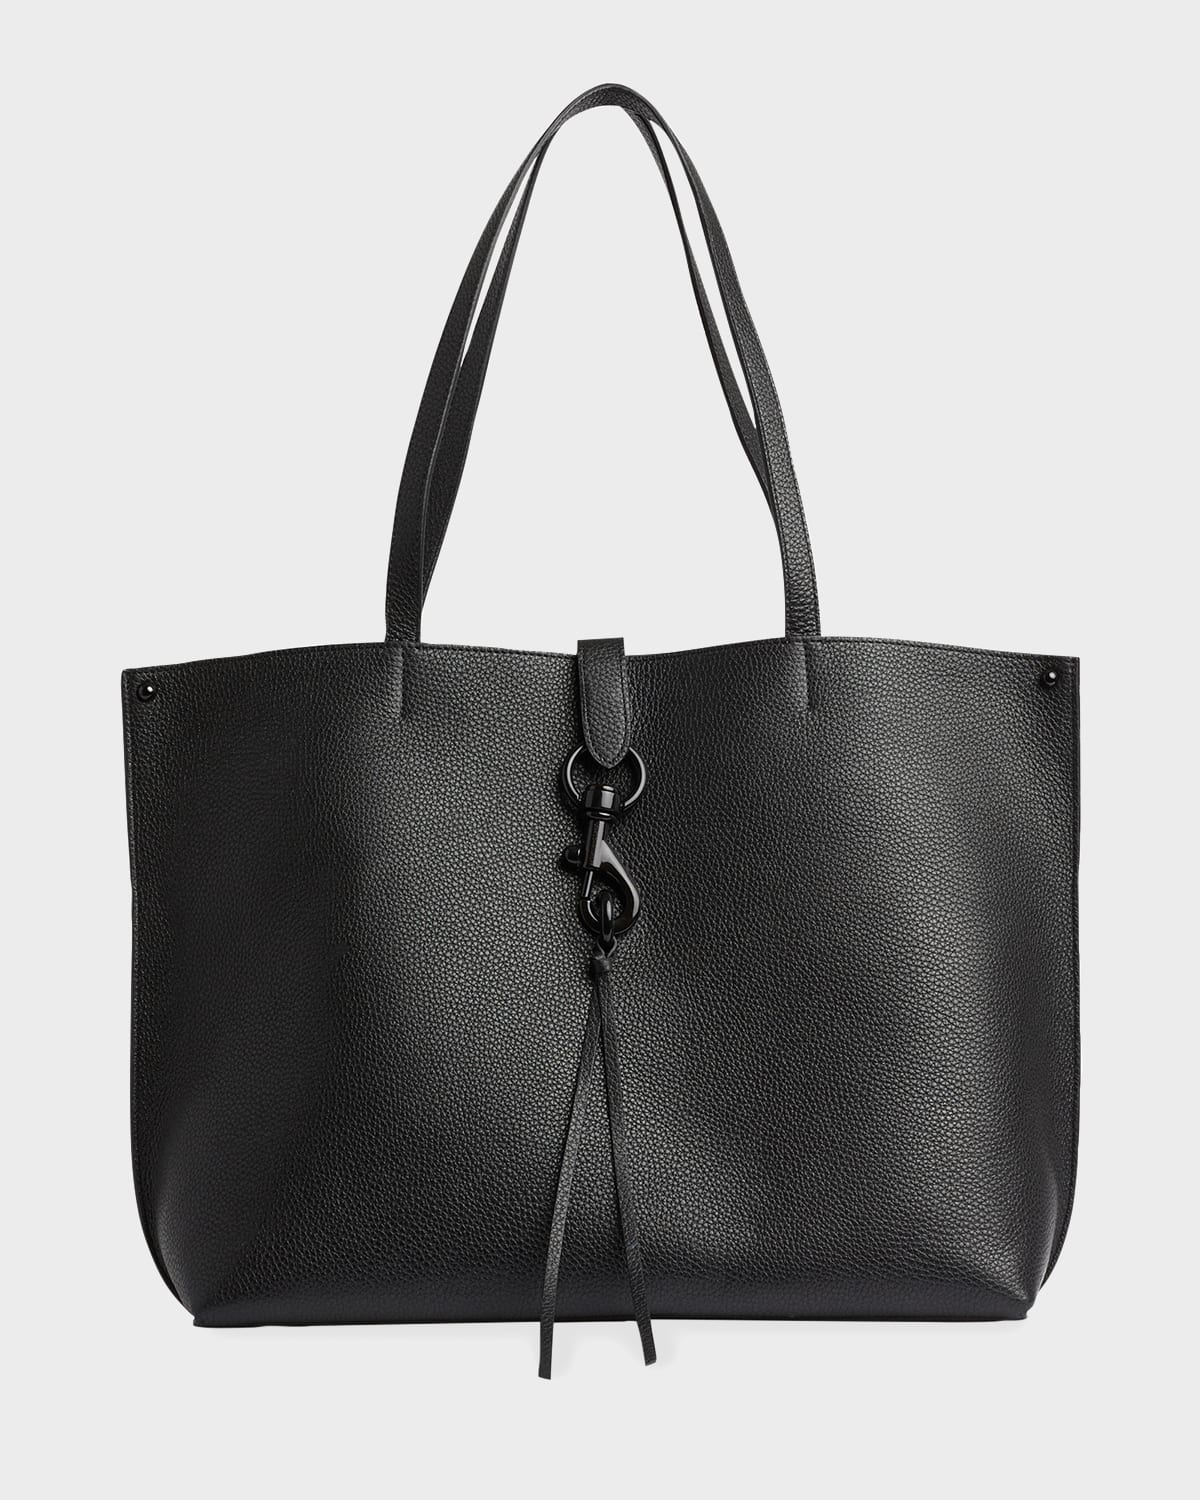 Megan Leather Shopper Tote Bag